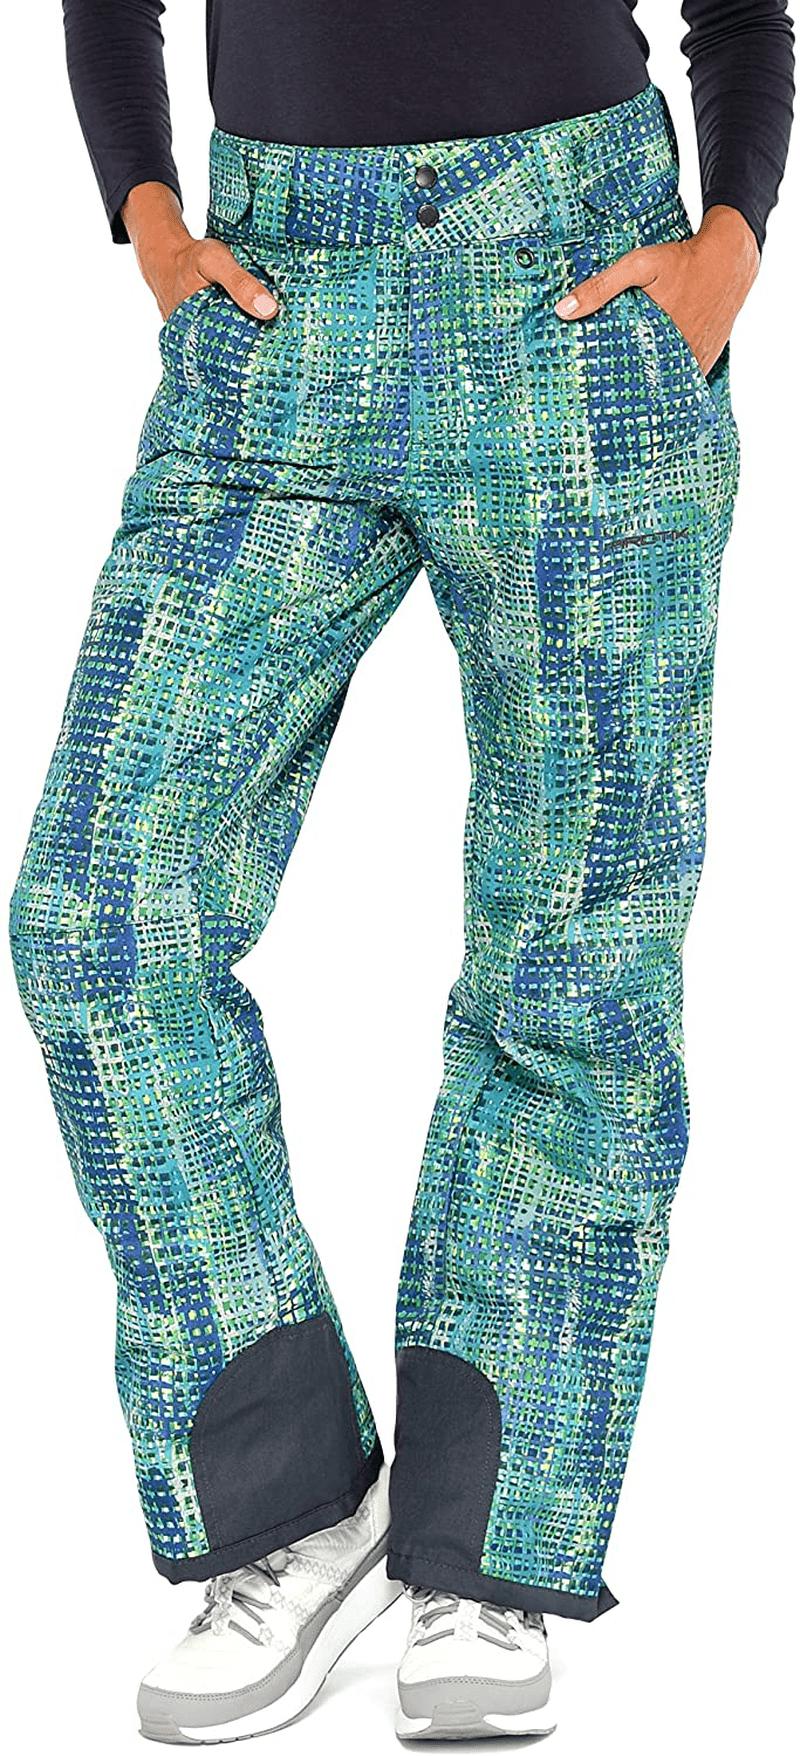 Arctix Women's Insulated Snow Pants Apparel & Accessories > Clothing > Outerwear > Snow Pants & Suits Arctix Windows Print Blue Small 